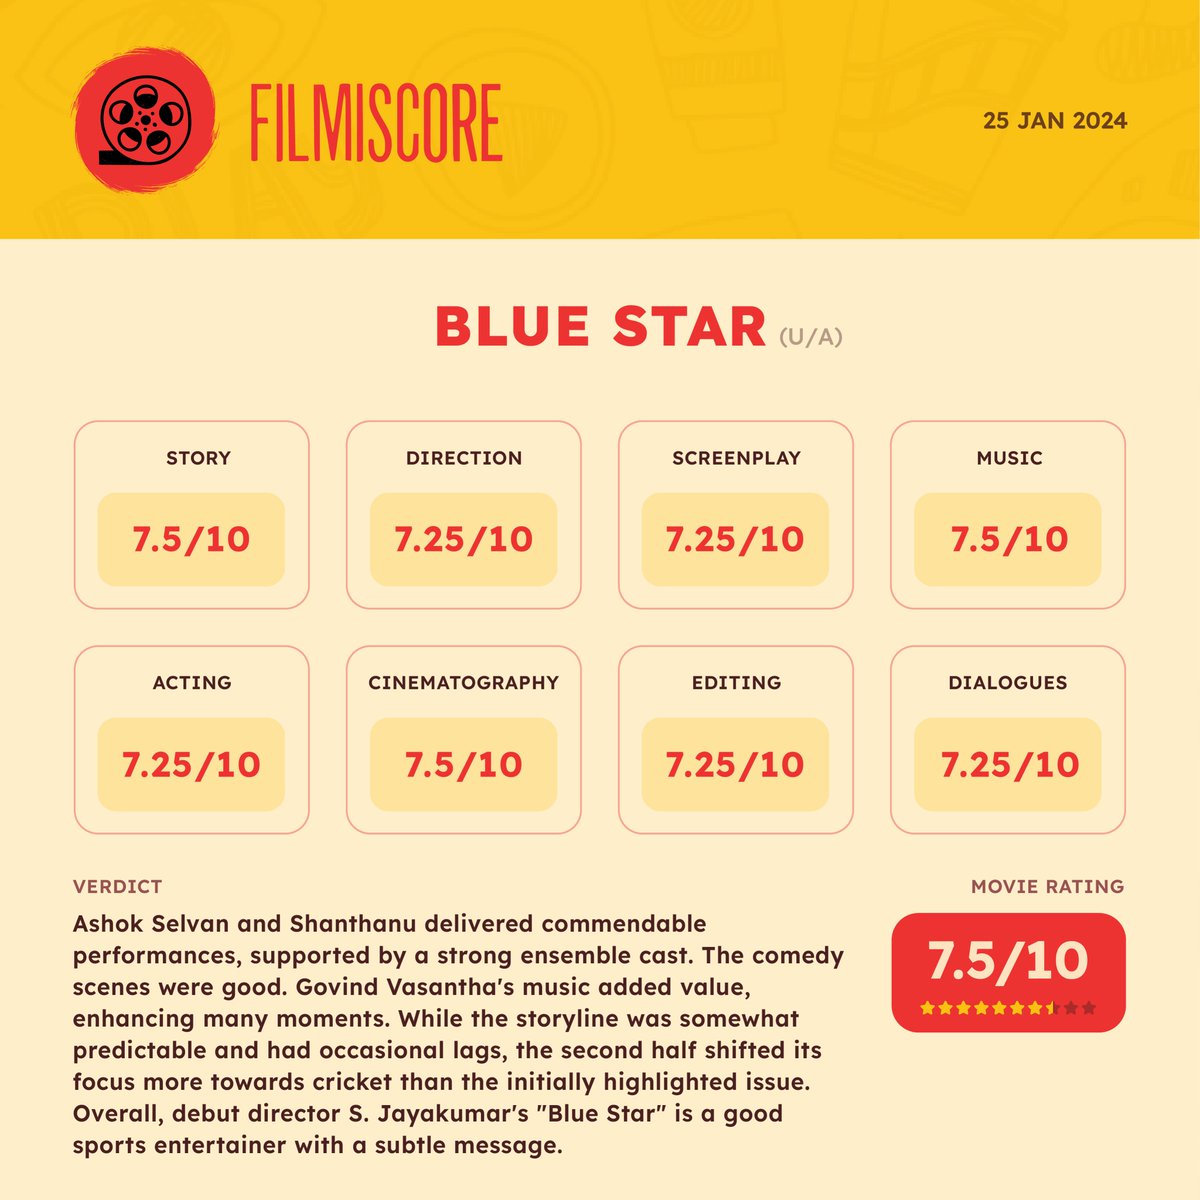 Blue Star movie review

#BlueStar #BlueStarReview #BlueStarMovie #BlueStarFromJan25 #AshokSelvan #Shanthanu #KeerthiPandiyan #PrithviPandiarajan #GovindVasantha #SJayakumar #DhivyaDuraisamy #Cricket #NeelamProductions #PaRanjith #Filmiscore